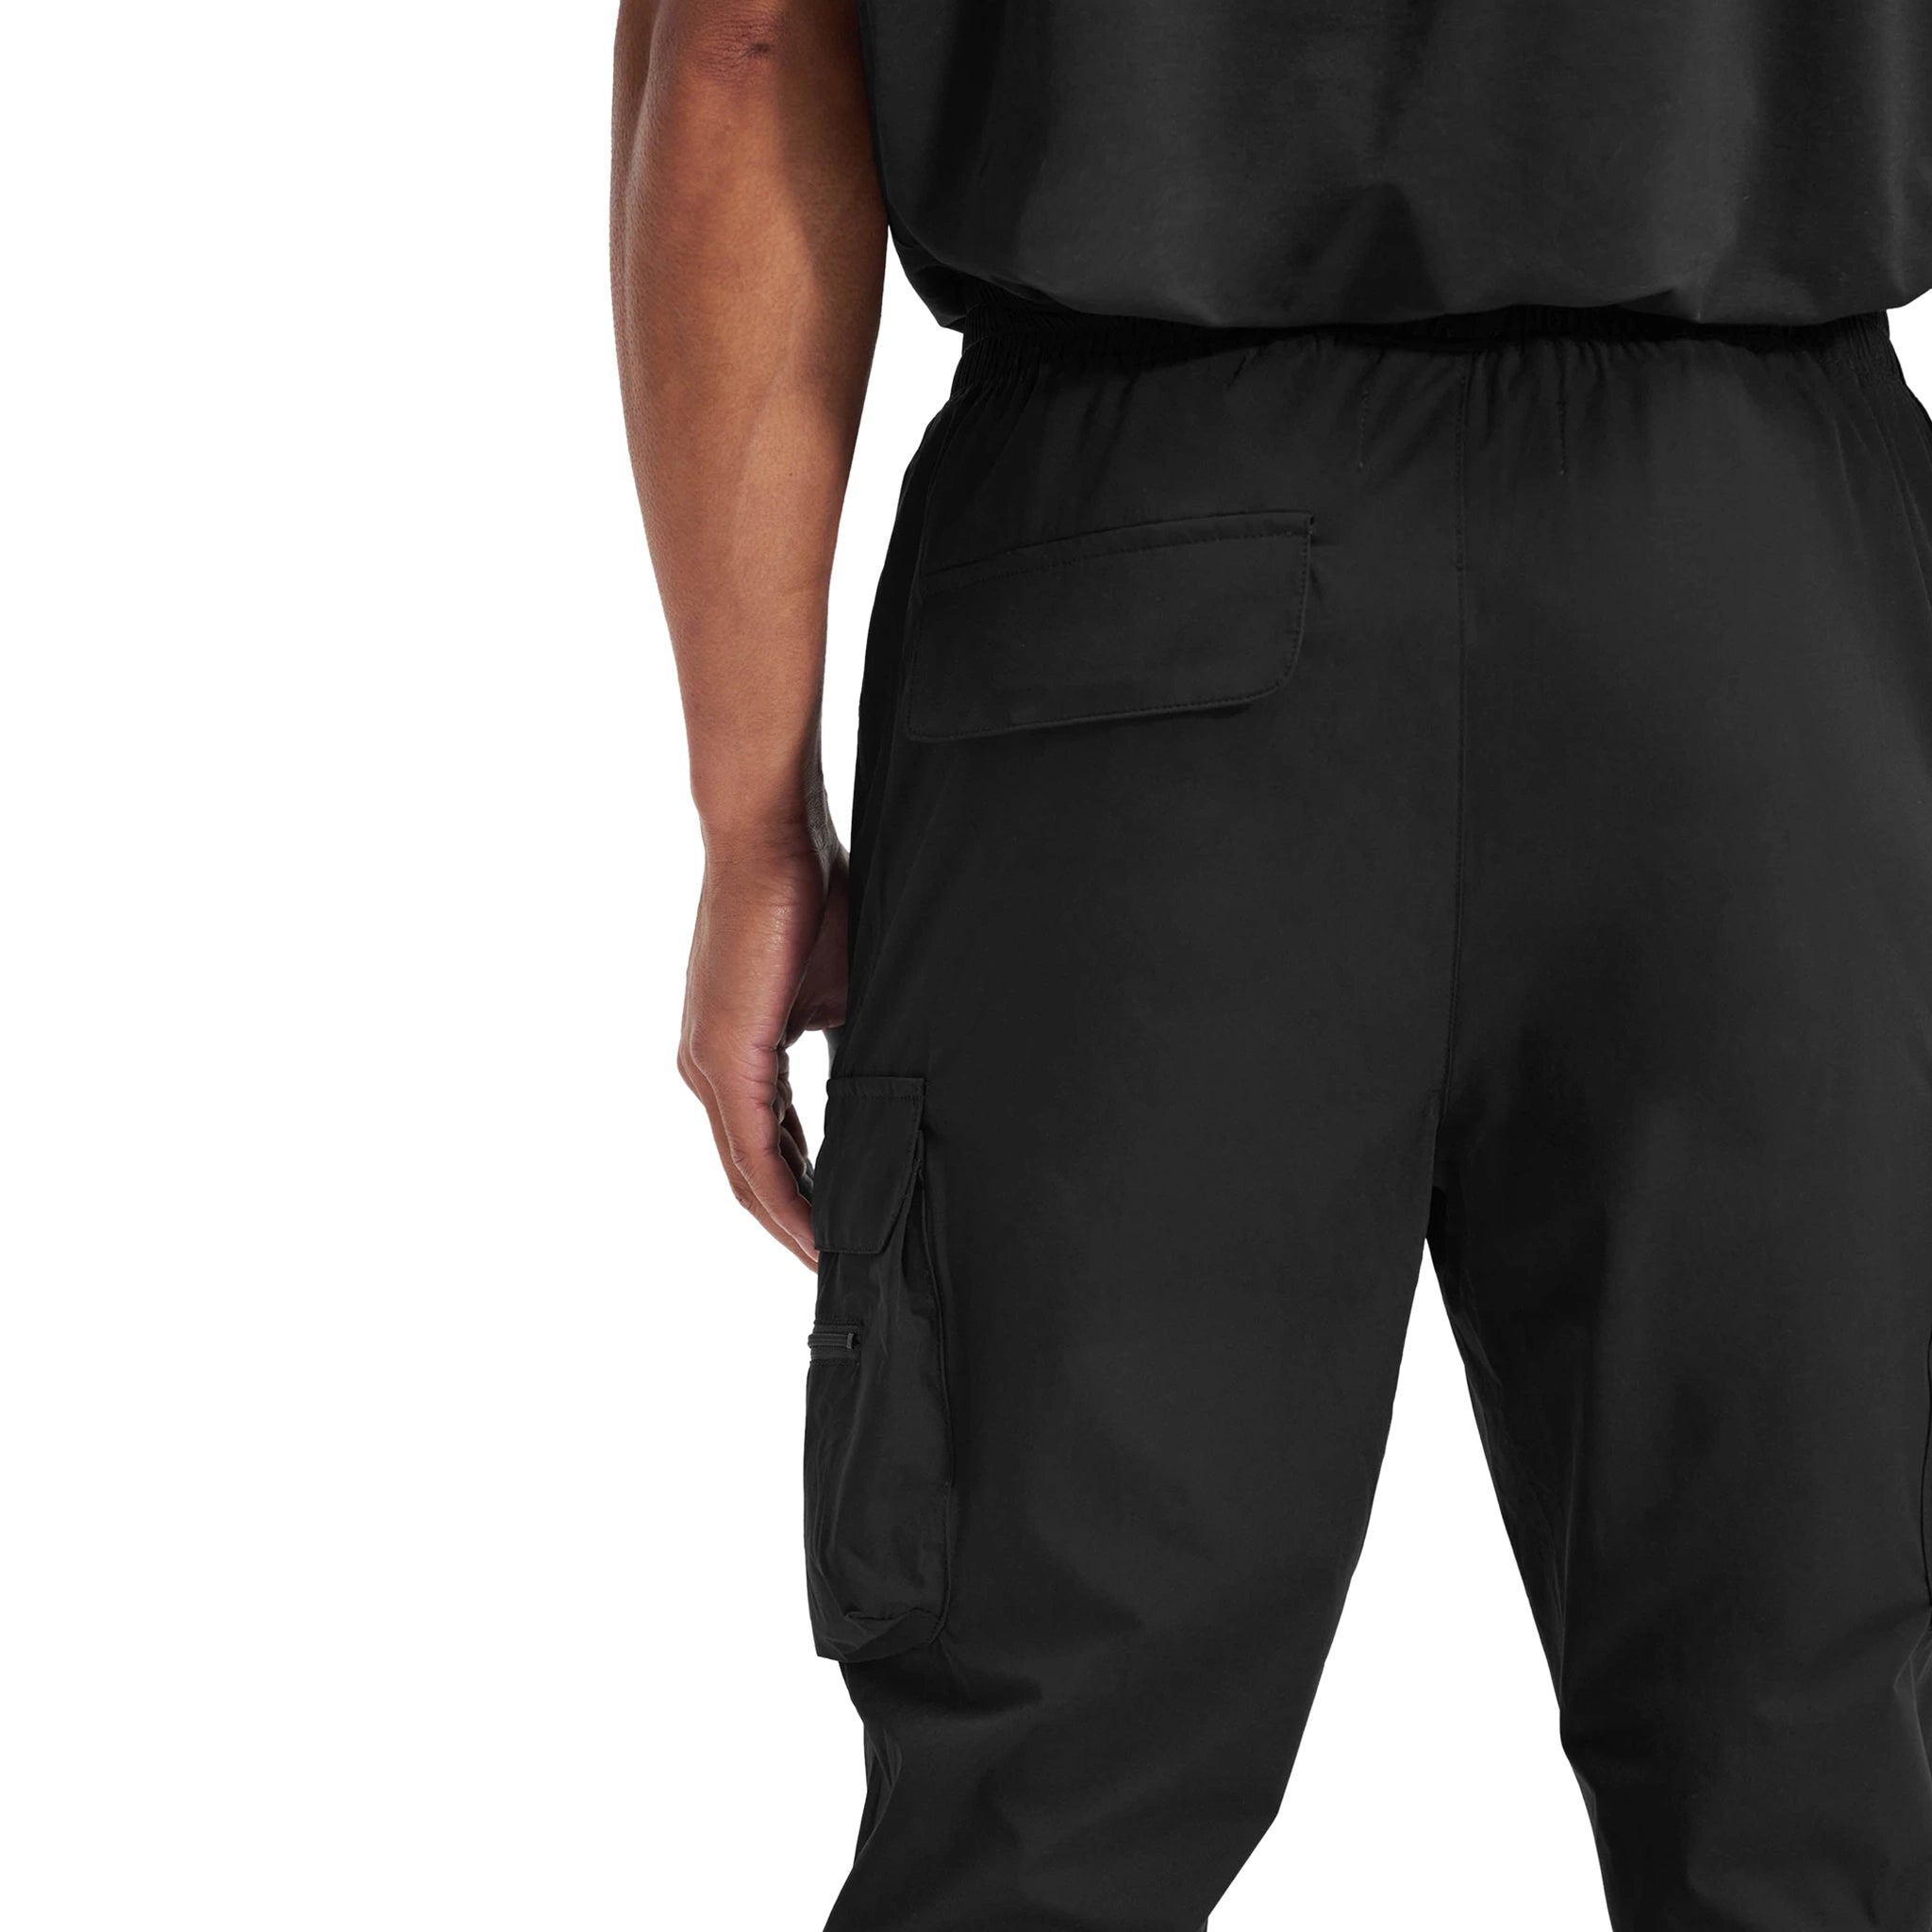 BAck pocket view of Represent 247 Black Cargo Pants